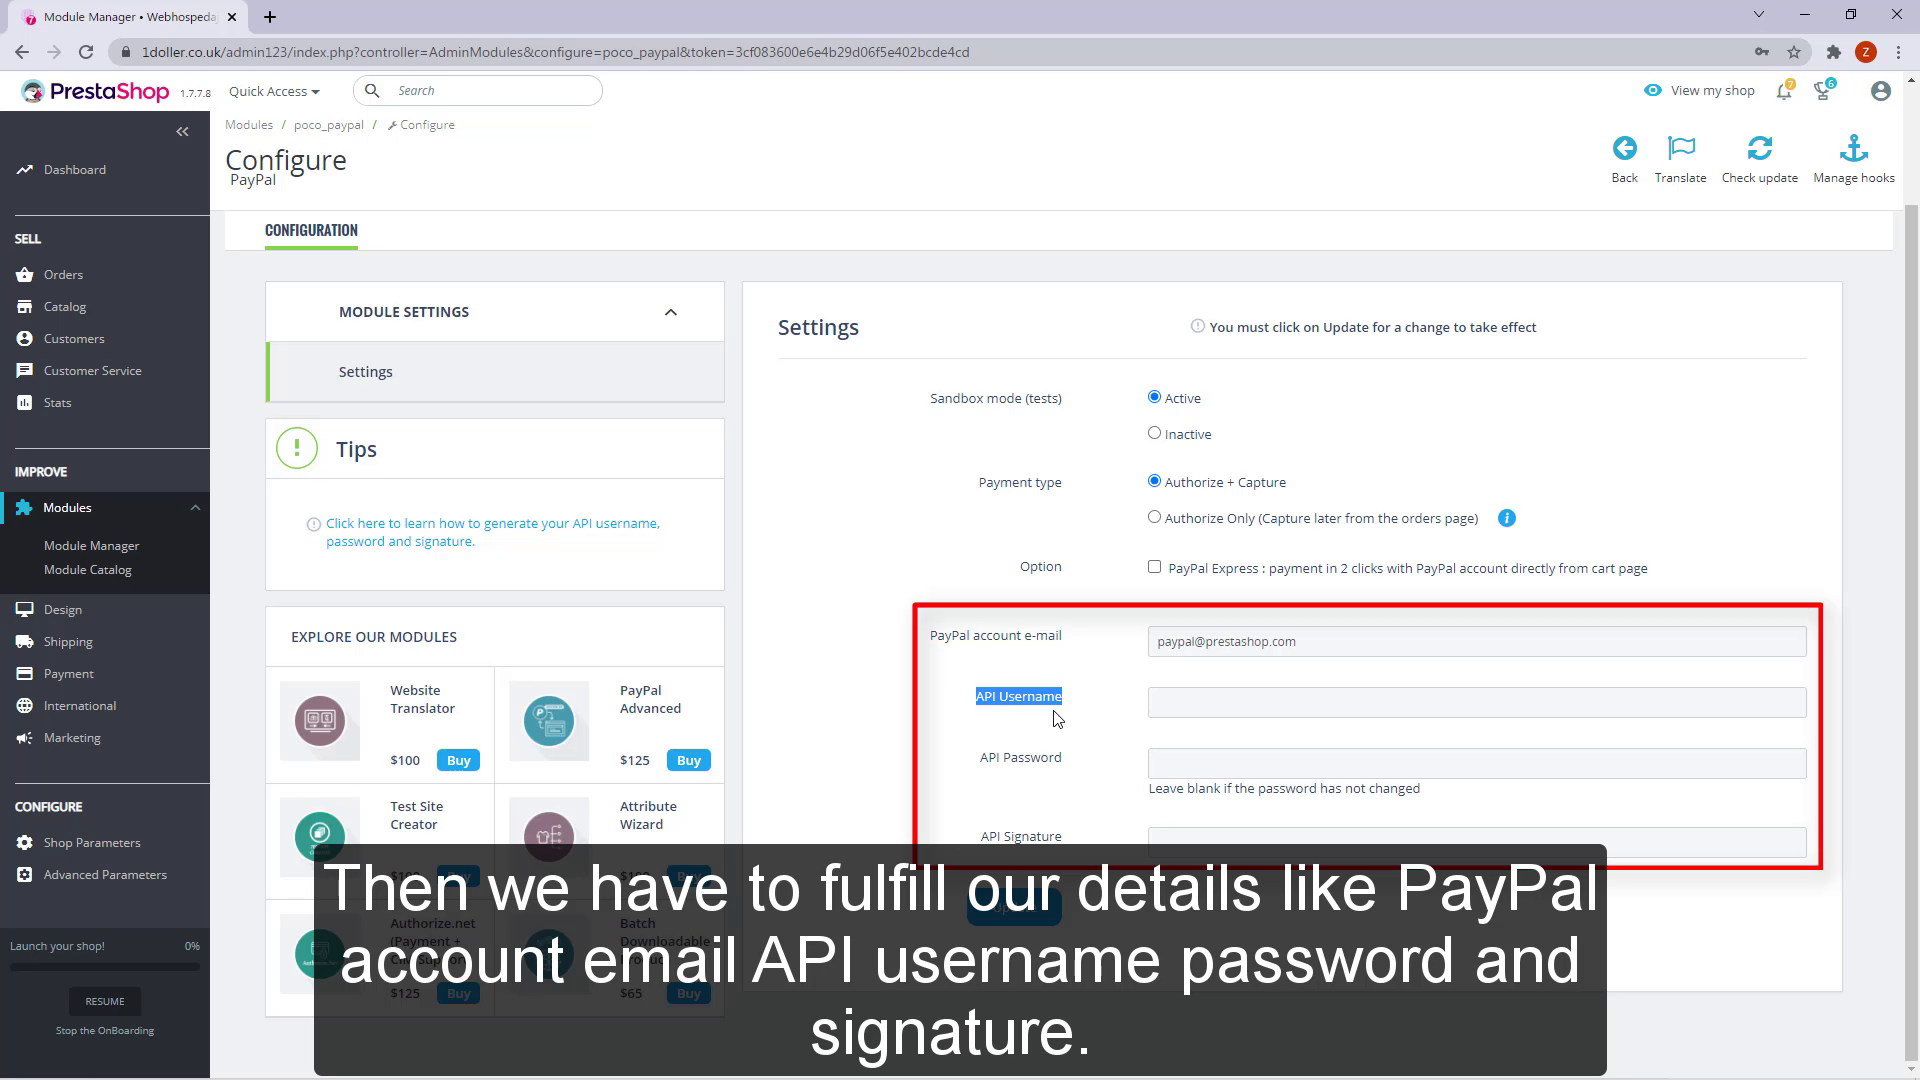 API username password and signature